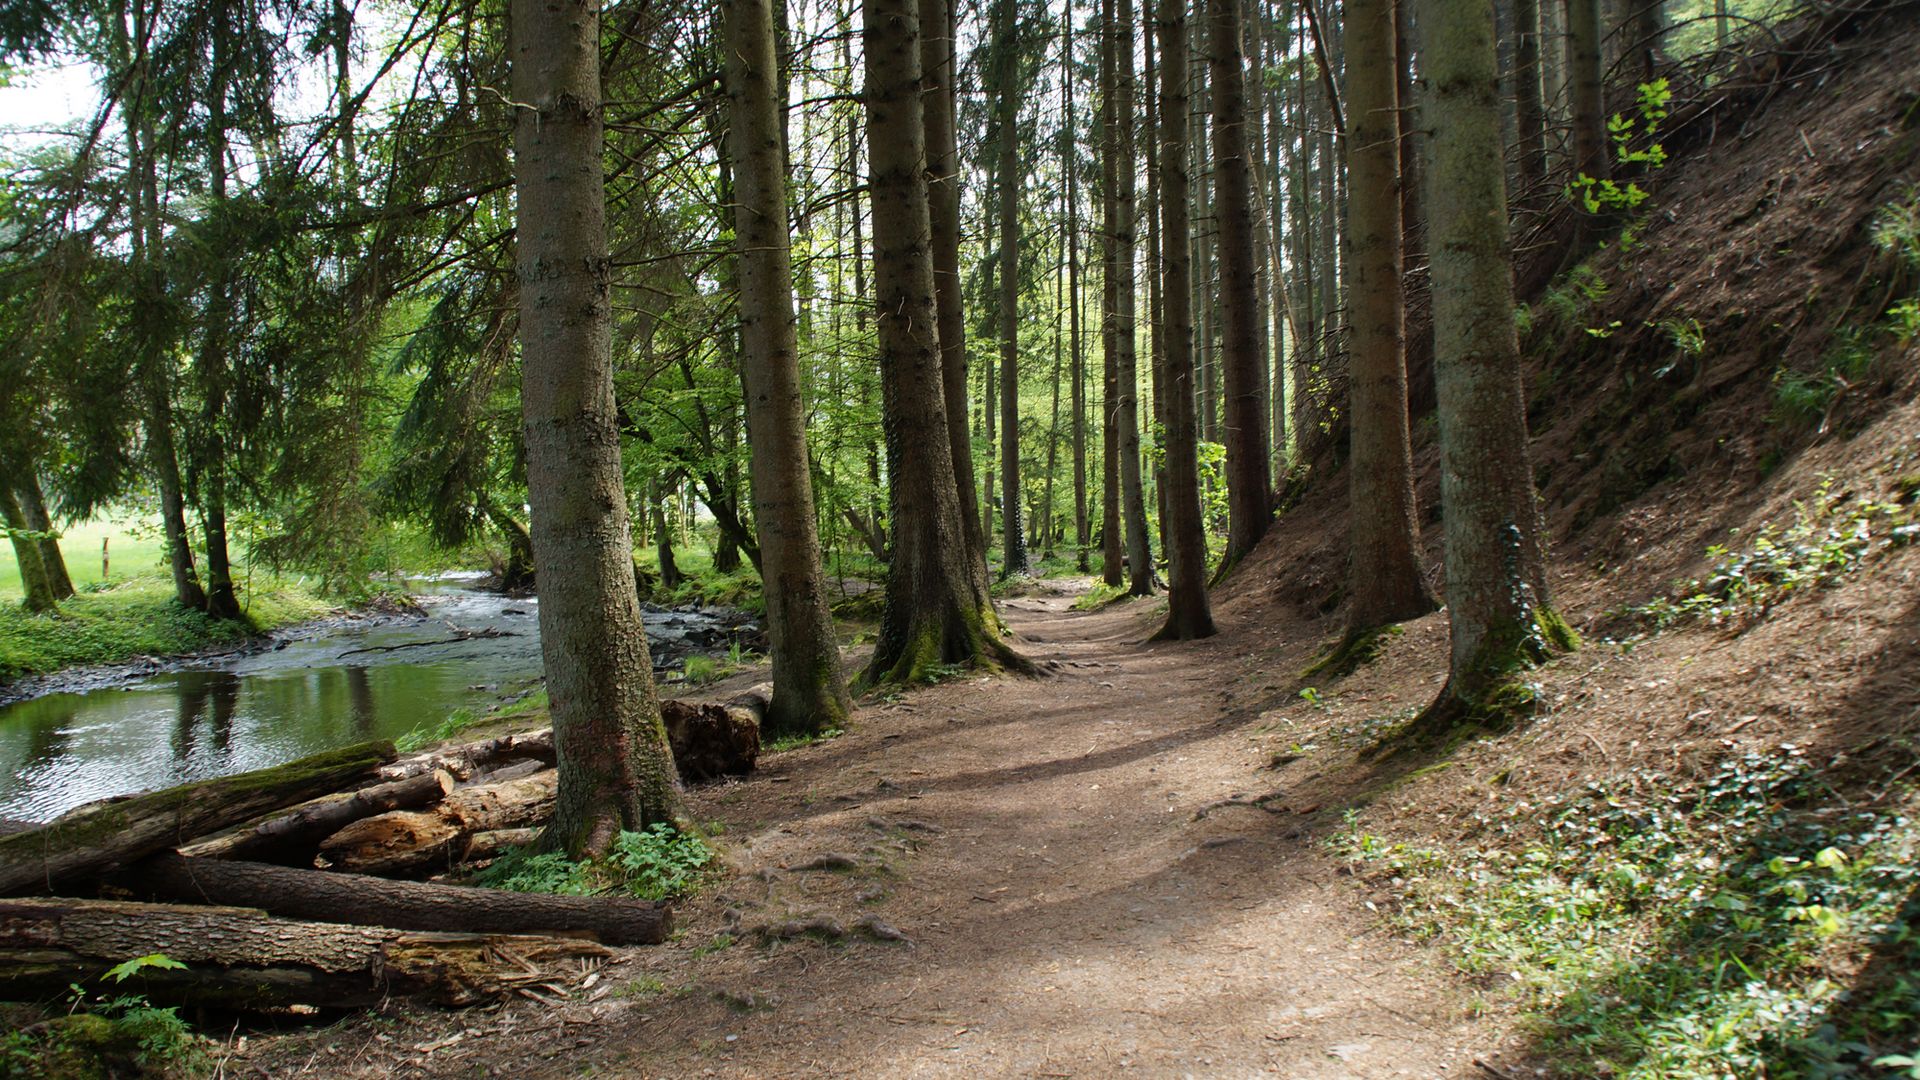 Wanderweg durch den Wald, links fließt der Eifgenbach nebenher